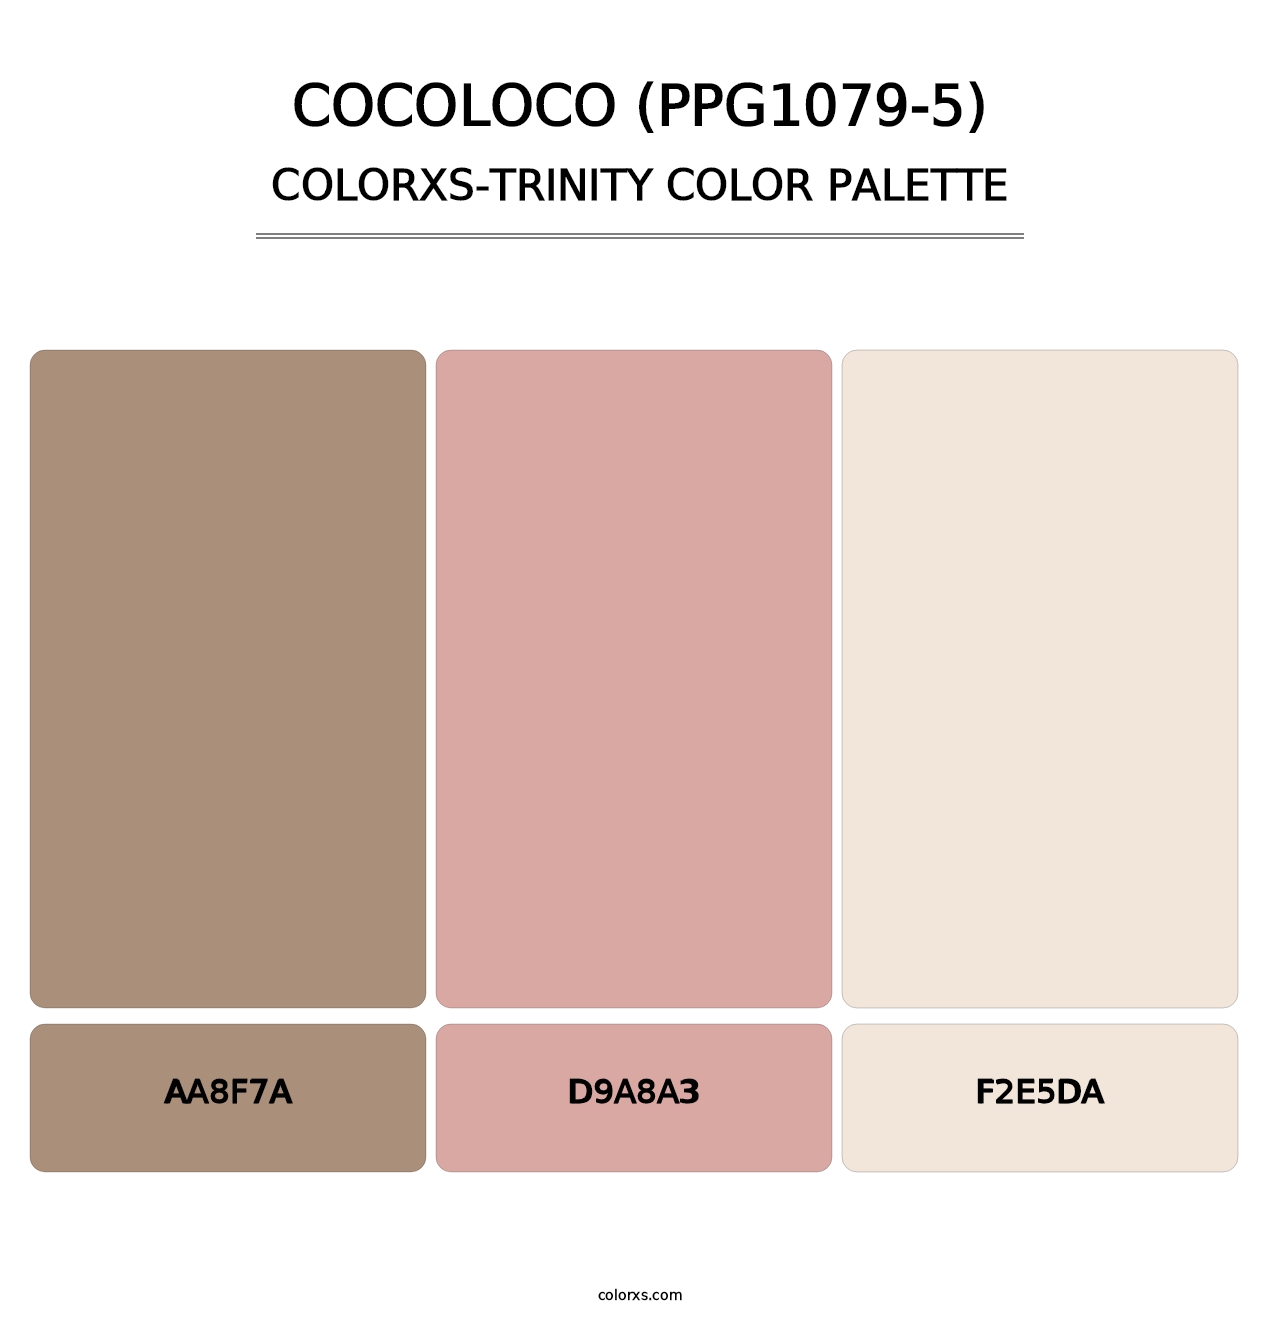 Cocoloco (PPG1079-5) - Colorxs Trinity Palette